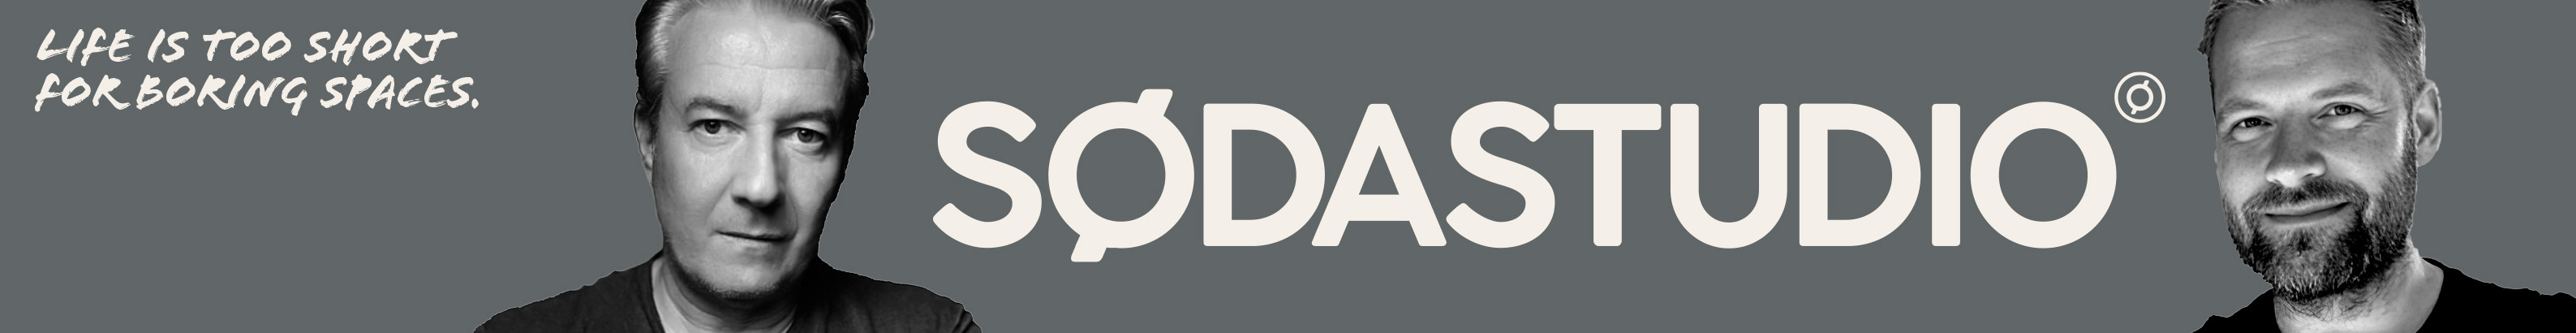 SODA STUDIO profil başlığı